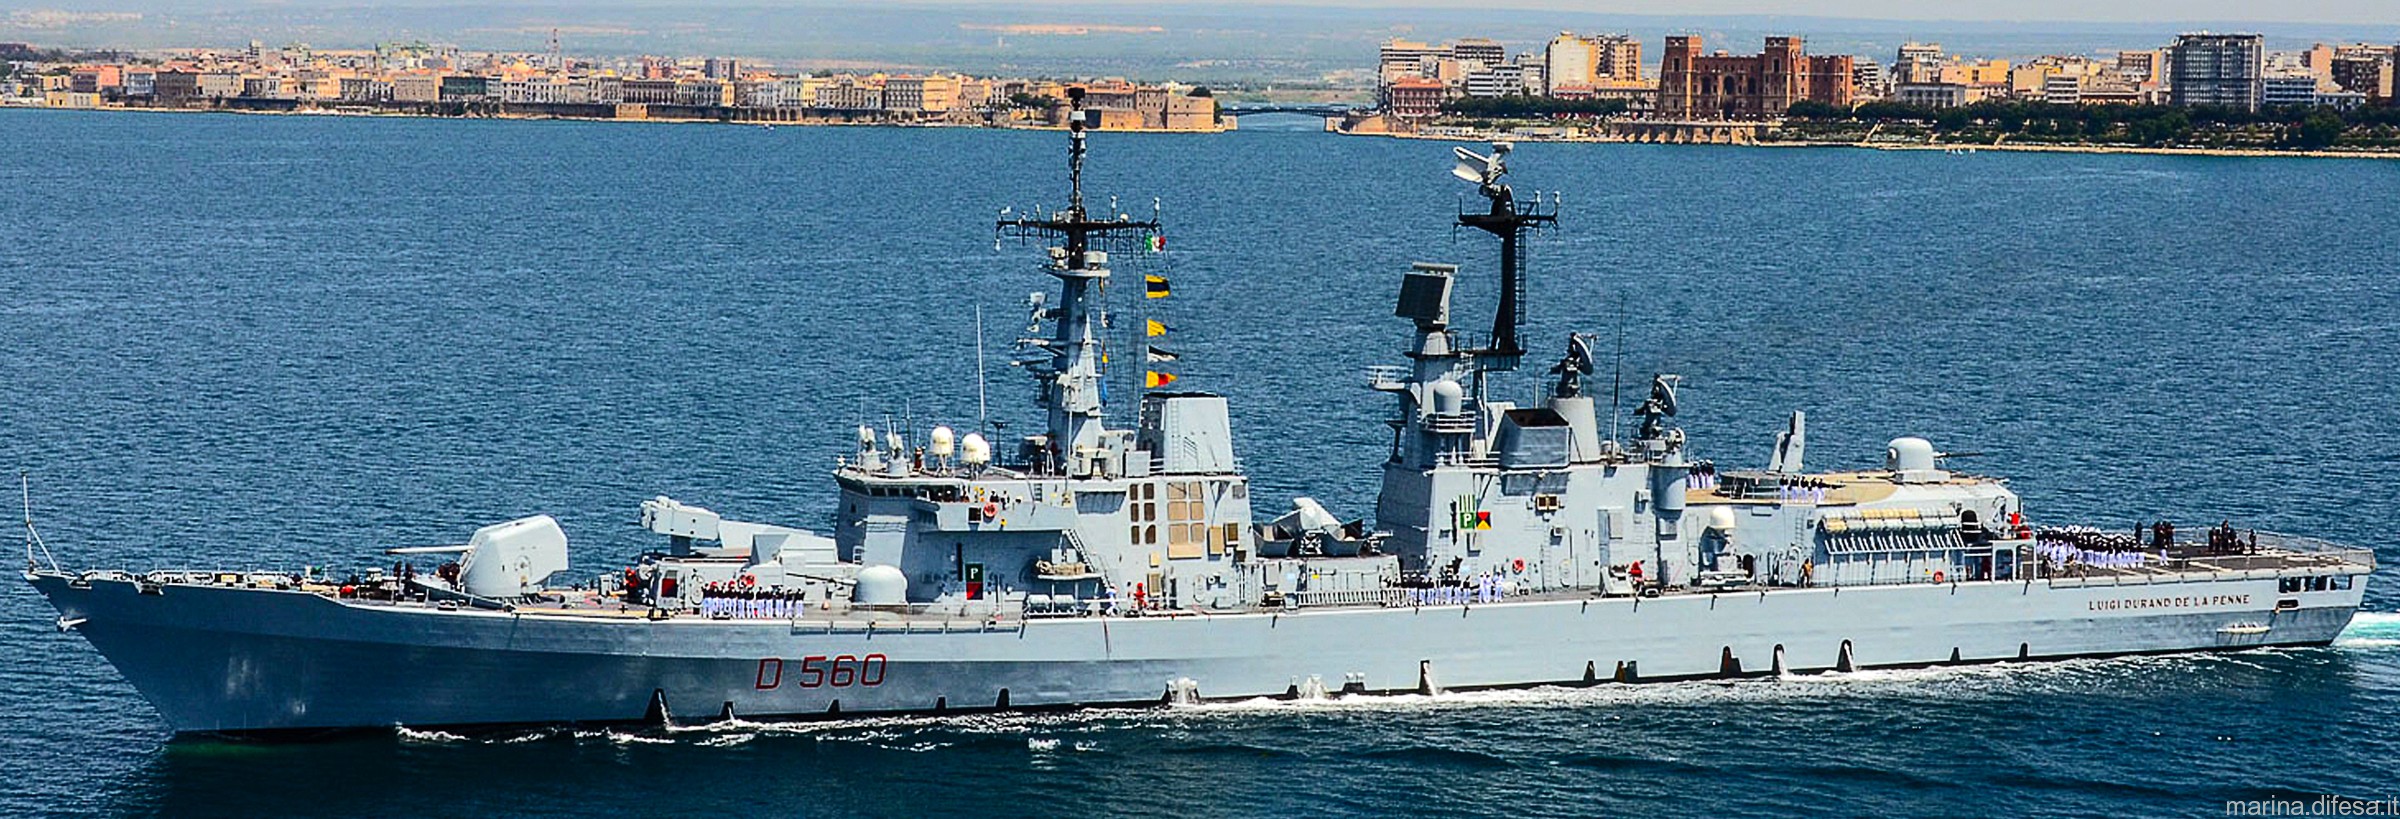 d-560 luigi durand de la penne its nave guided missile destroyer ddg italian navy marina militare 18